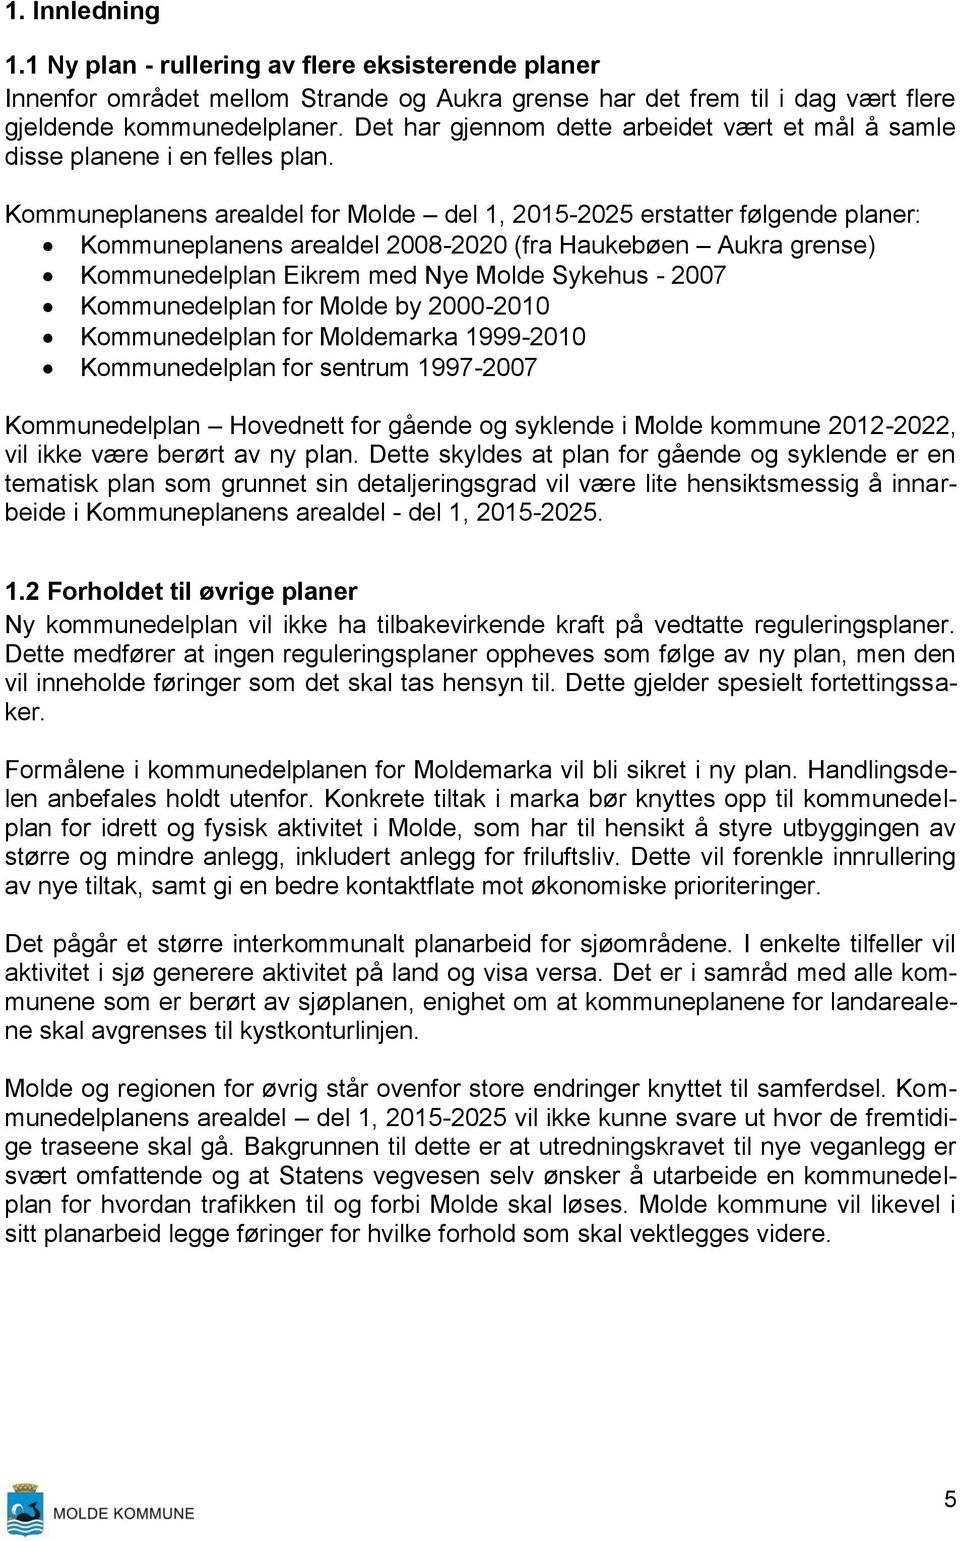 Kommuneplanens arealdel for Molde del 1, 2015-2025 erstatter følgende planer: Kommuneplanens arealdel 2008-2020 (fra Haukebøen Aukra grense) Kommunedelplan Eikrem med Nye Molde Sykehus - 2007